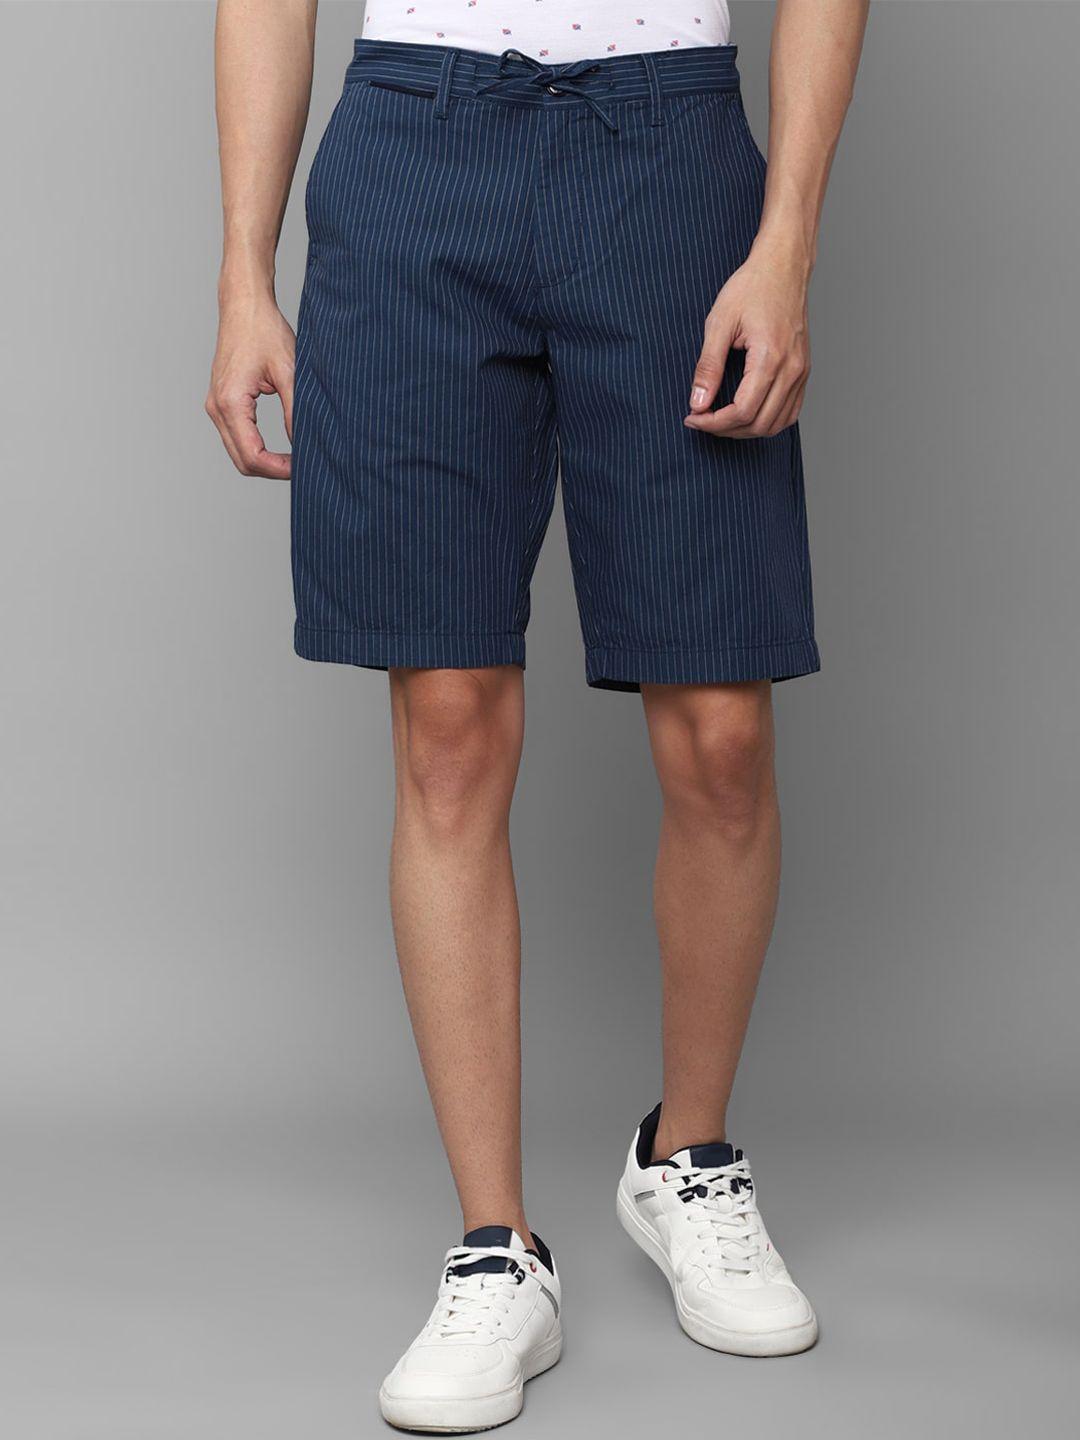 allen solly men navy blue striped printed slim fit shorts